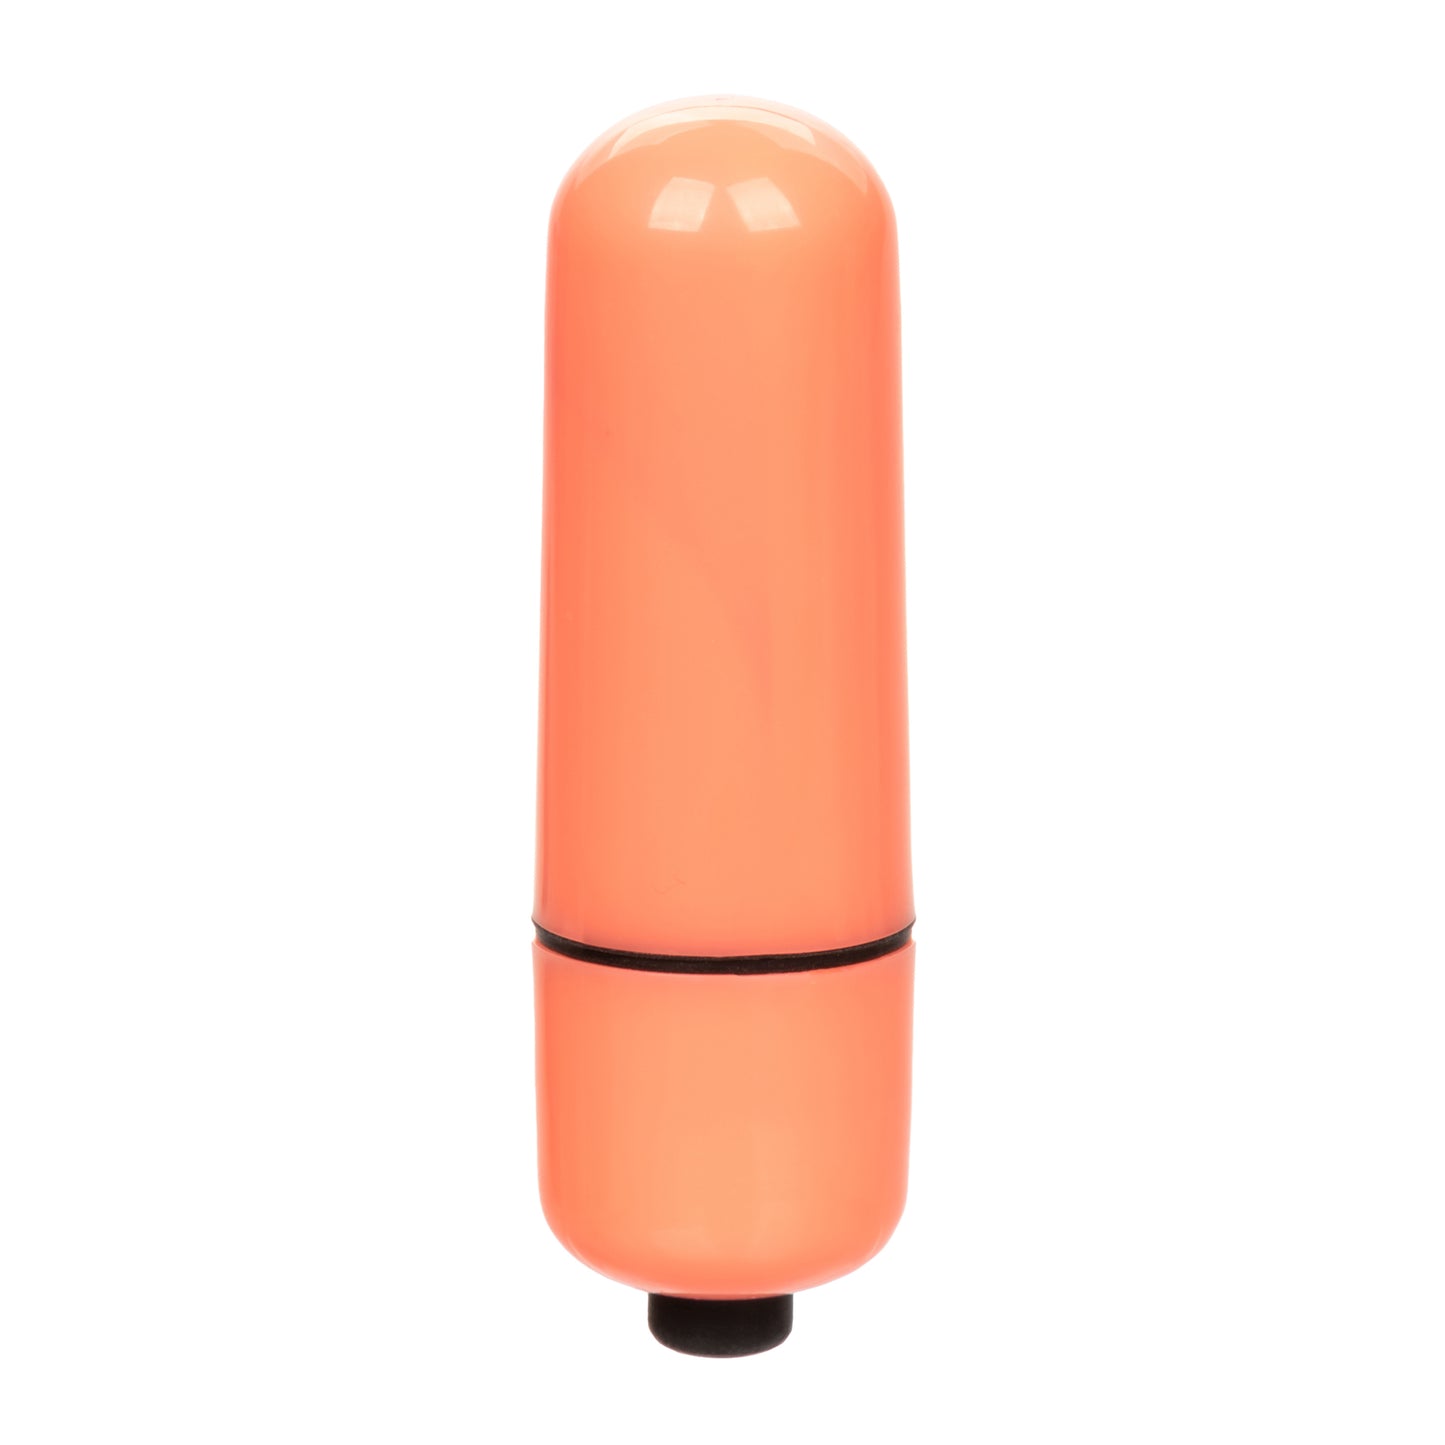 Foil Pack 3-Speed Bullet - Orange